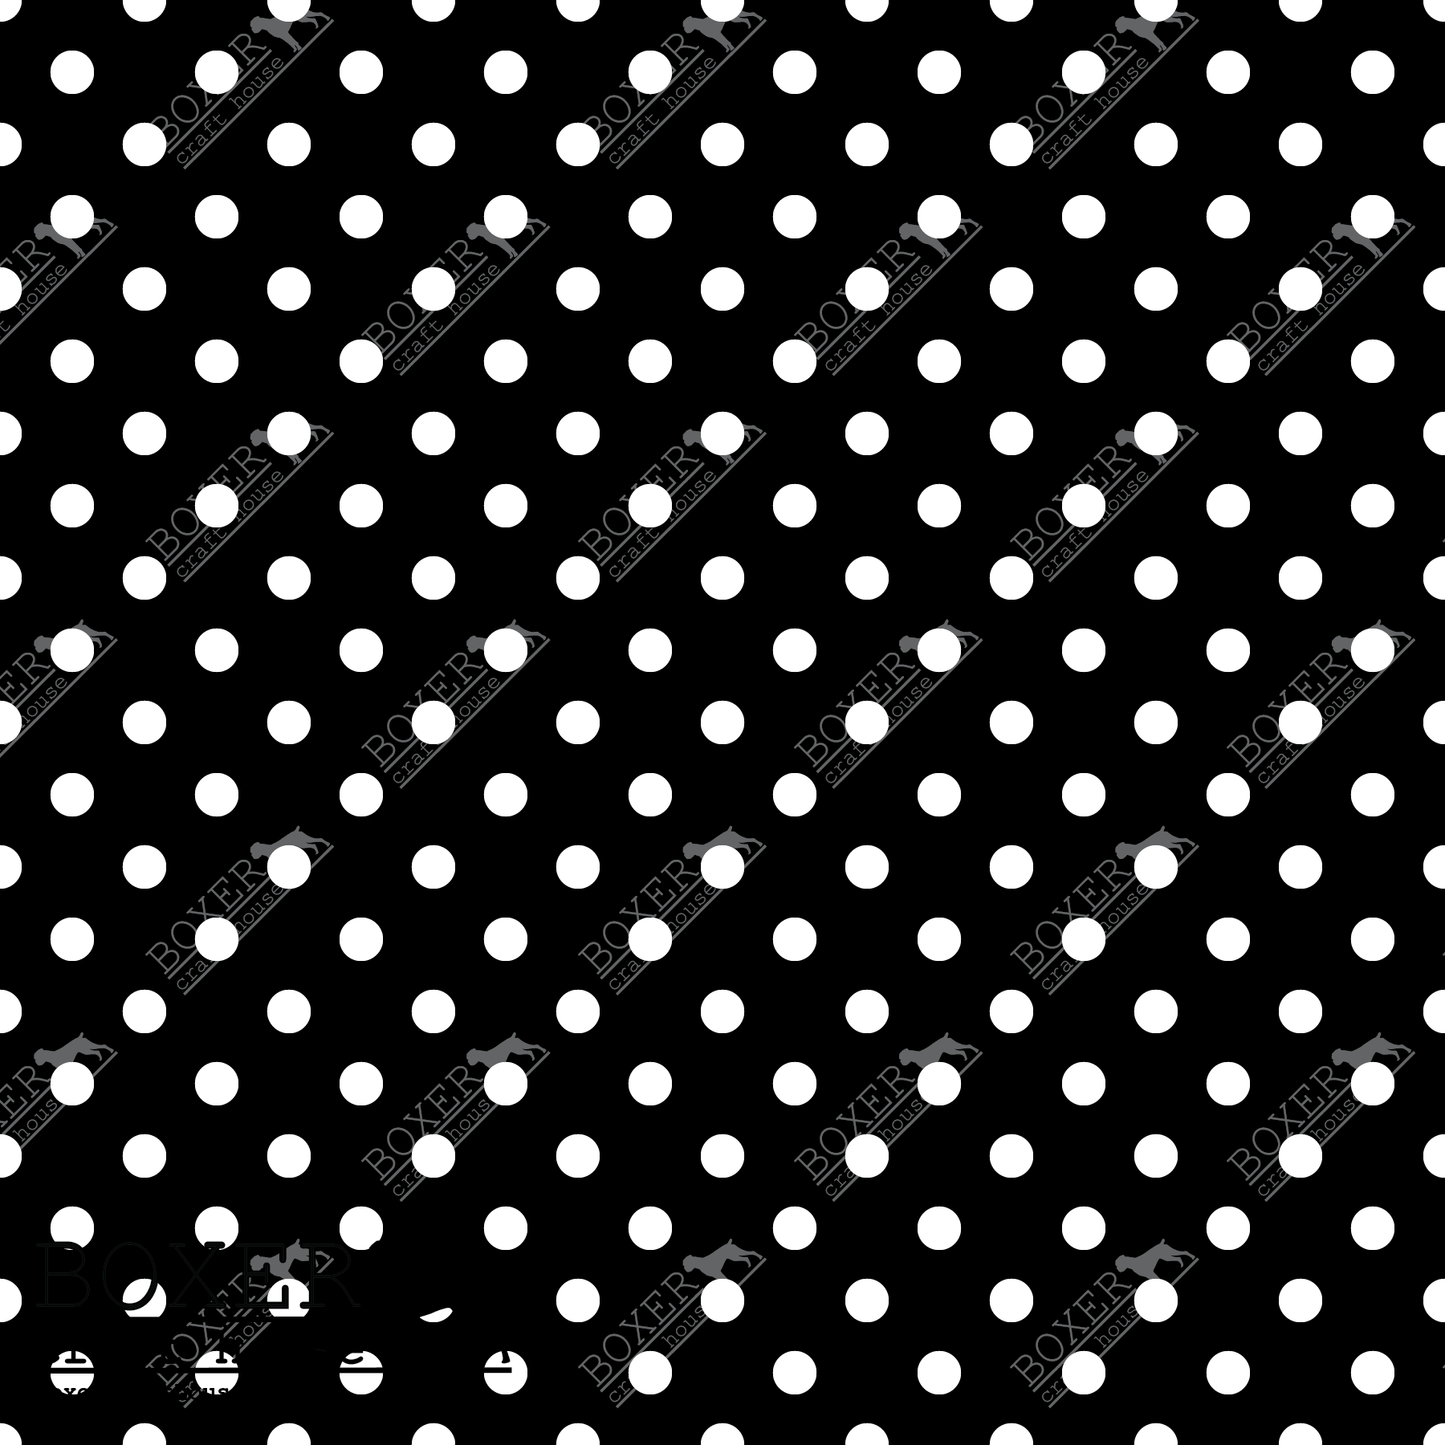 Dots 3/16" - Black